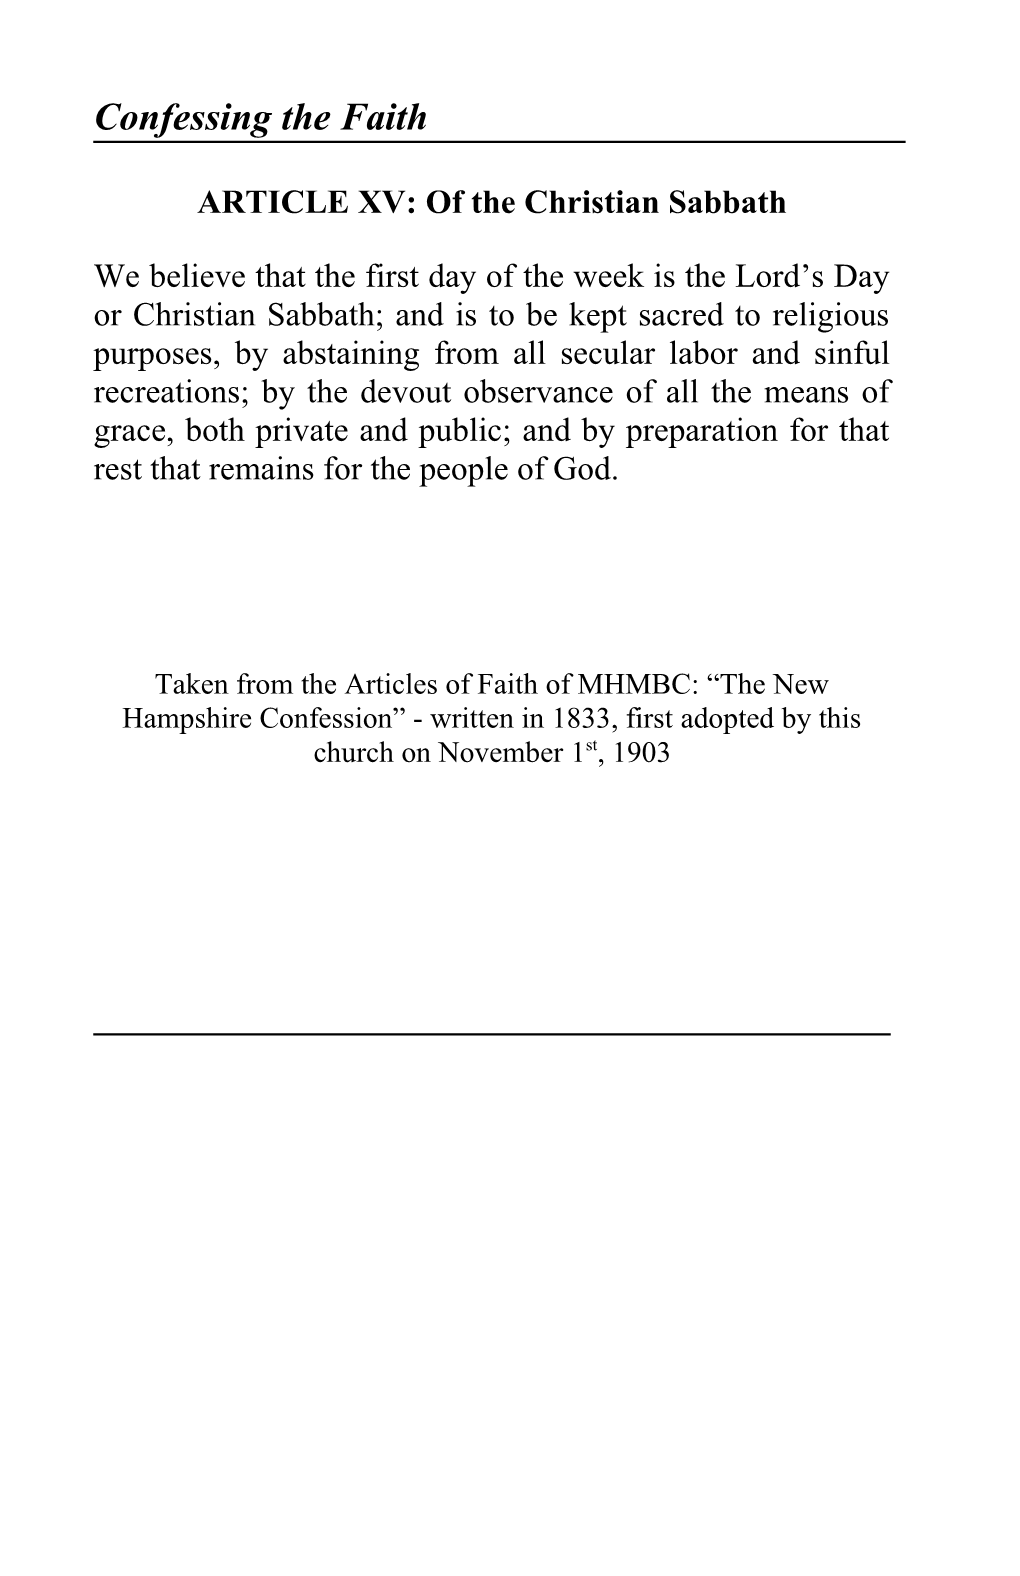 ARTICLE XV: of the Christian Sabbath